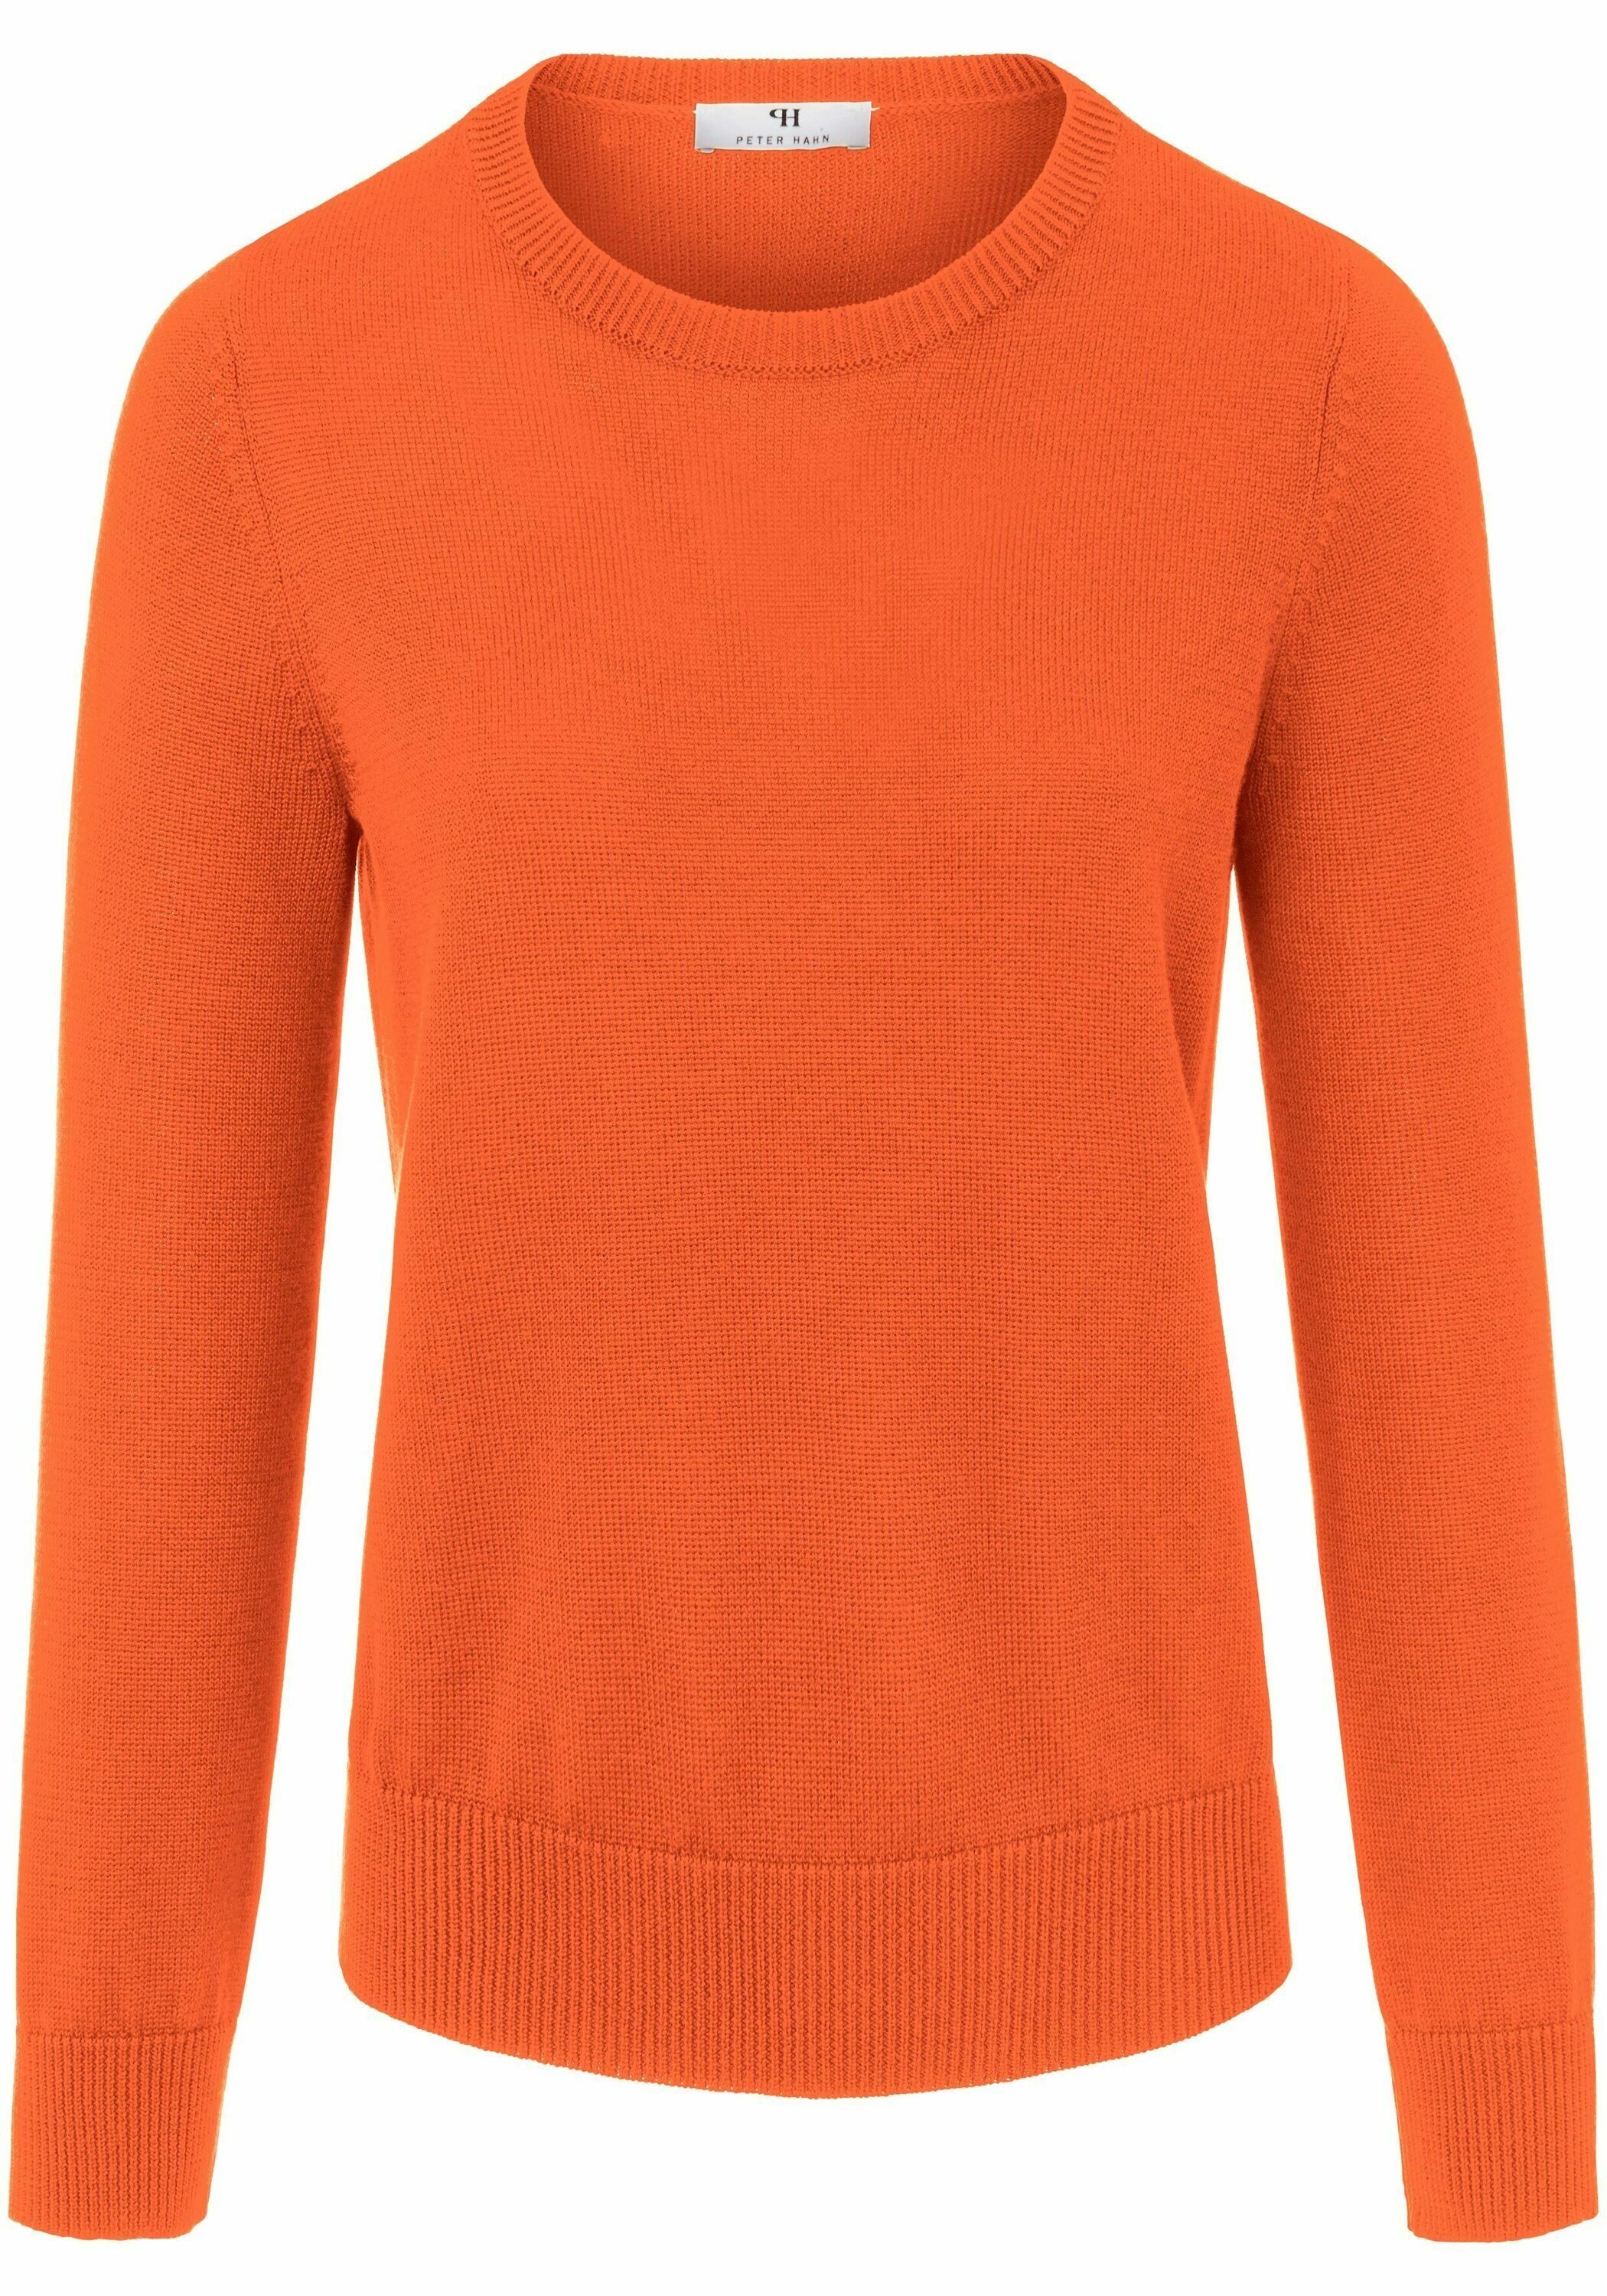 Naht Sweatshirt cotton orange Hahn Dekorative Peter